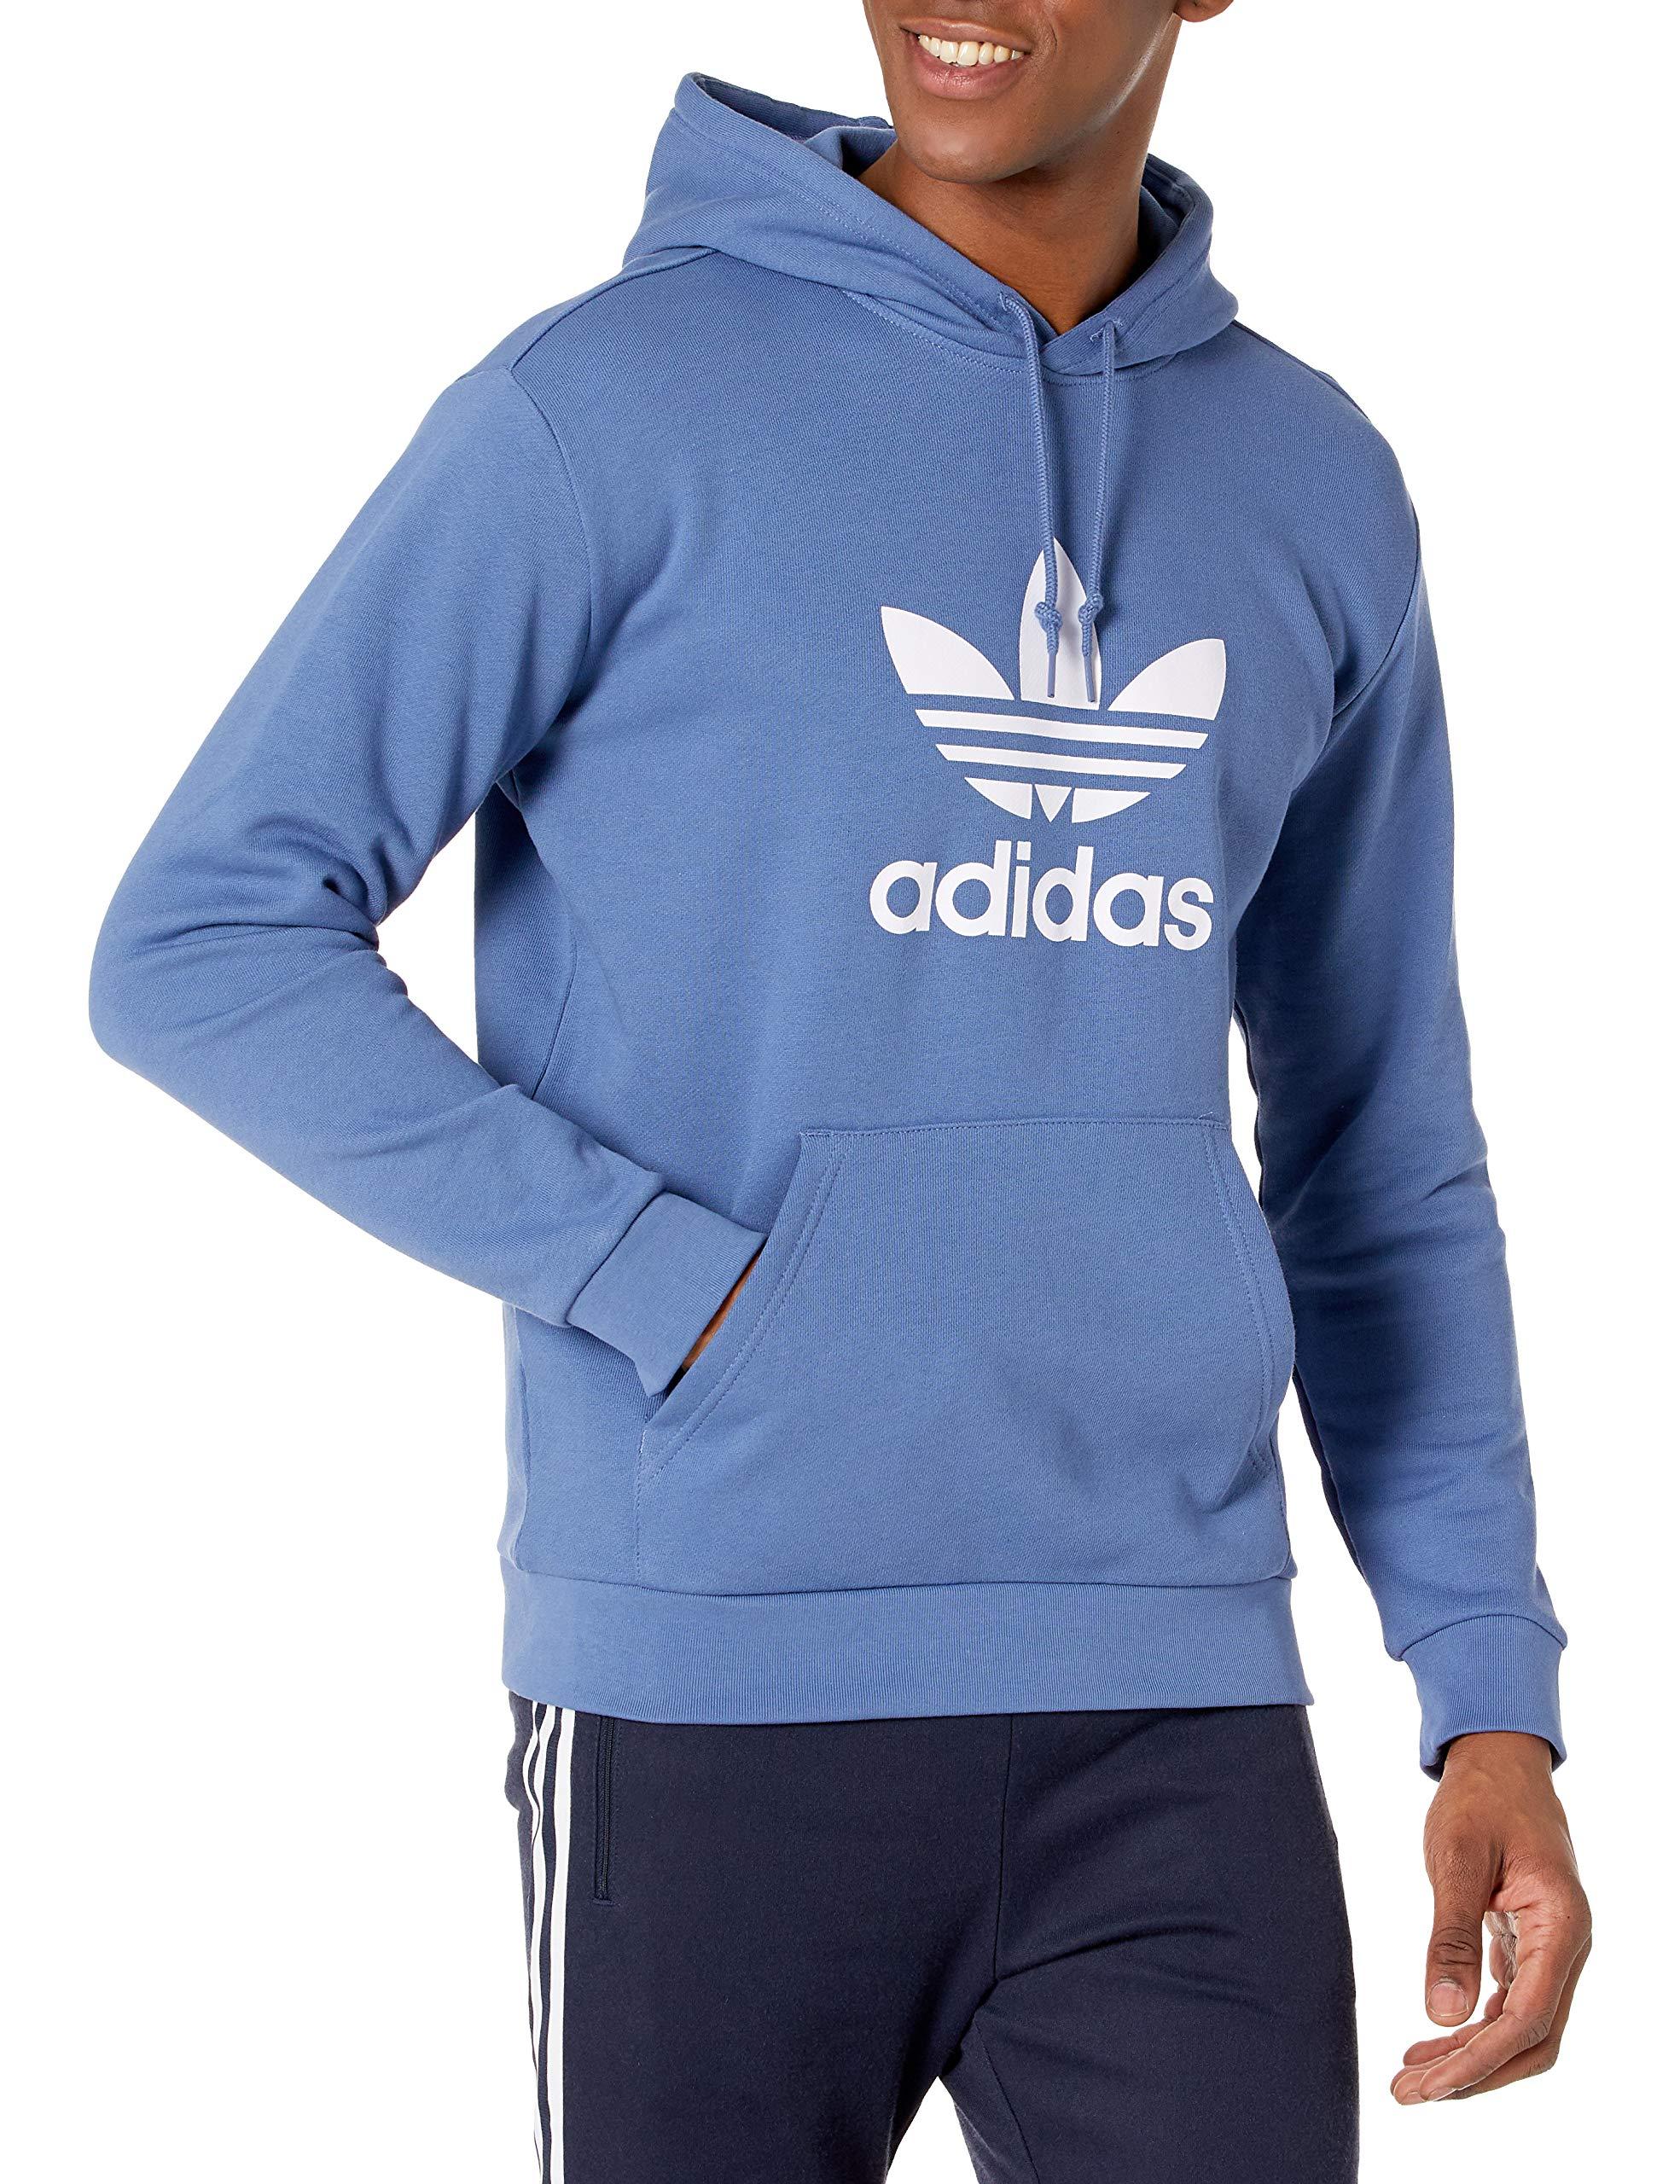 adidas Originals Cotton Trefoil Hoodie in Blue for Men - Save 40% - Lyst